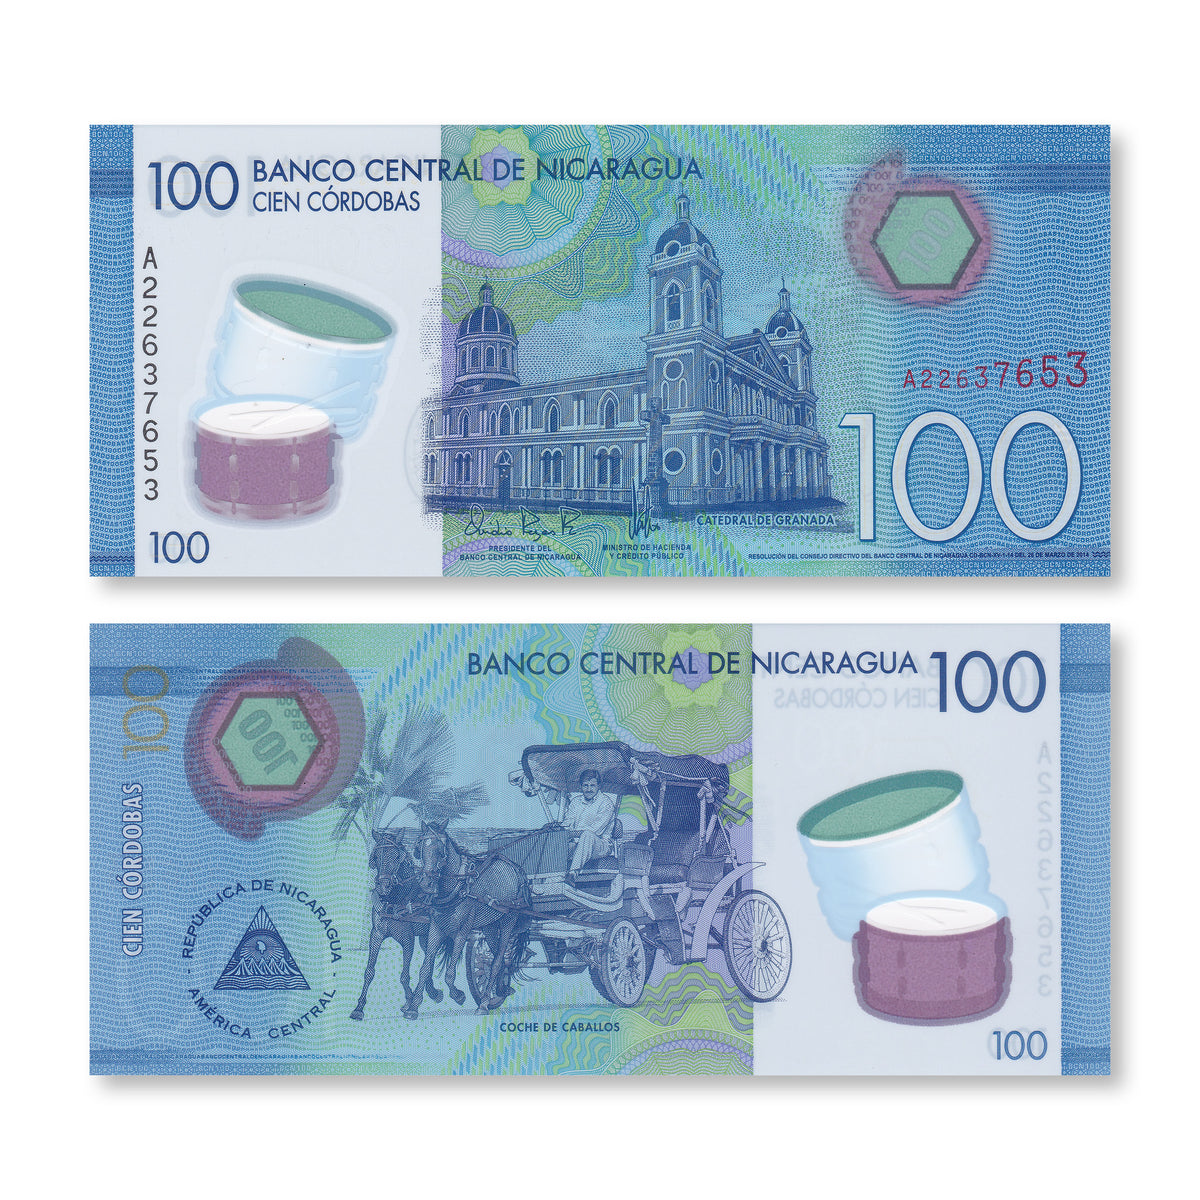 Nicaragua 100 Córdobas, 2014, B509a, P212a, UNC - Robert's World Money - World Banknotes